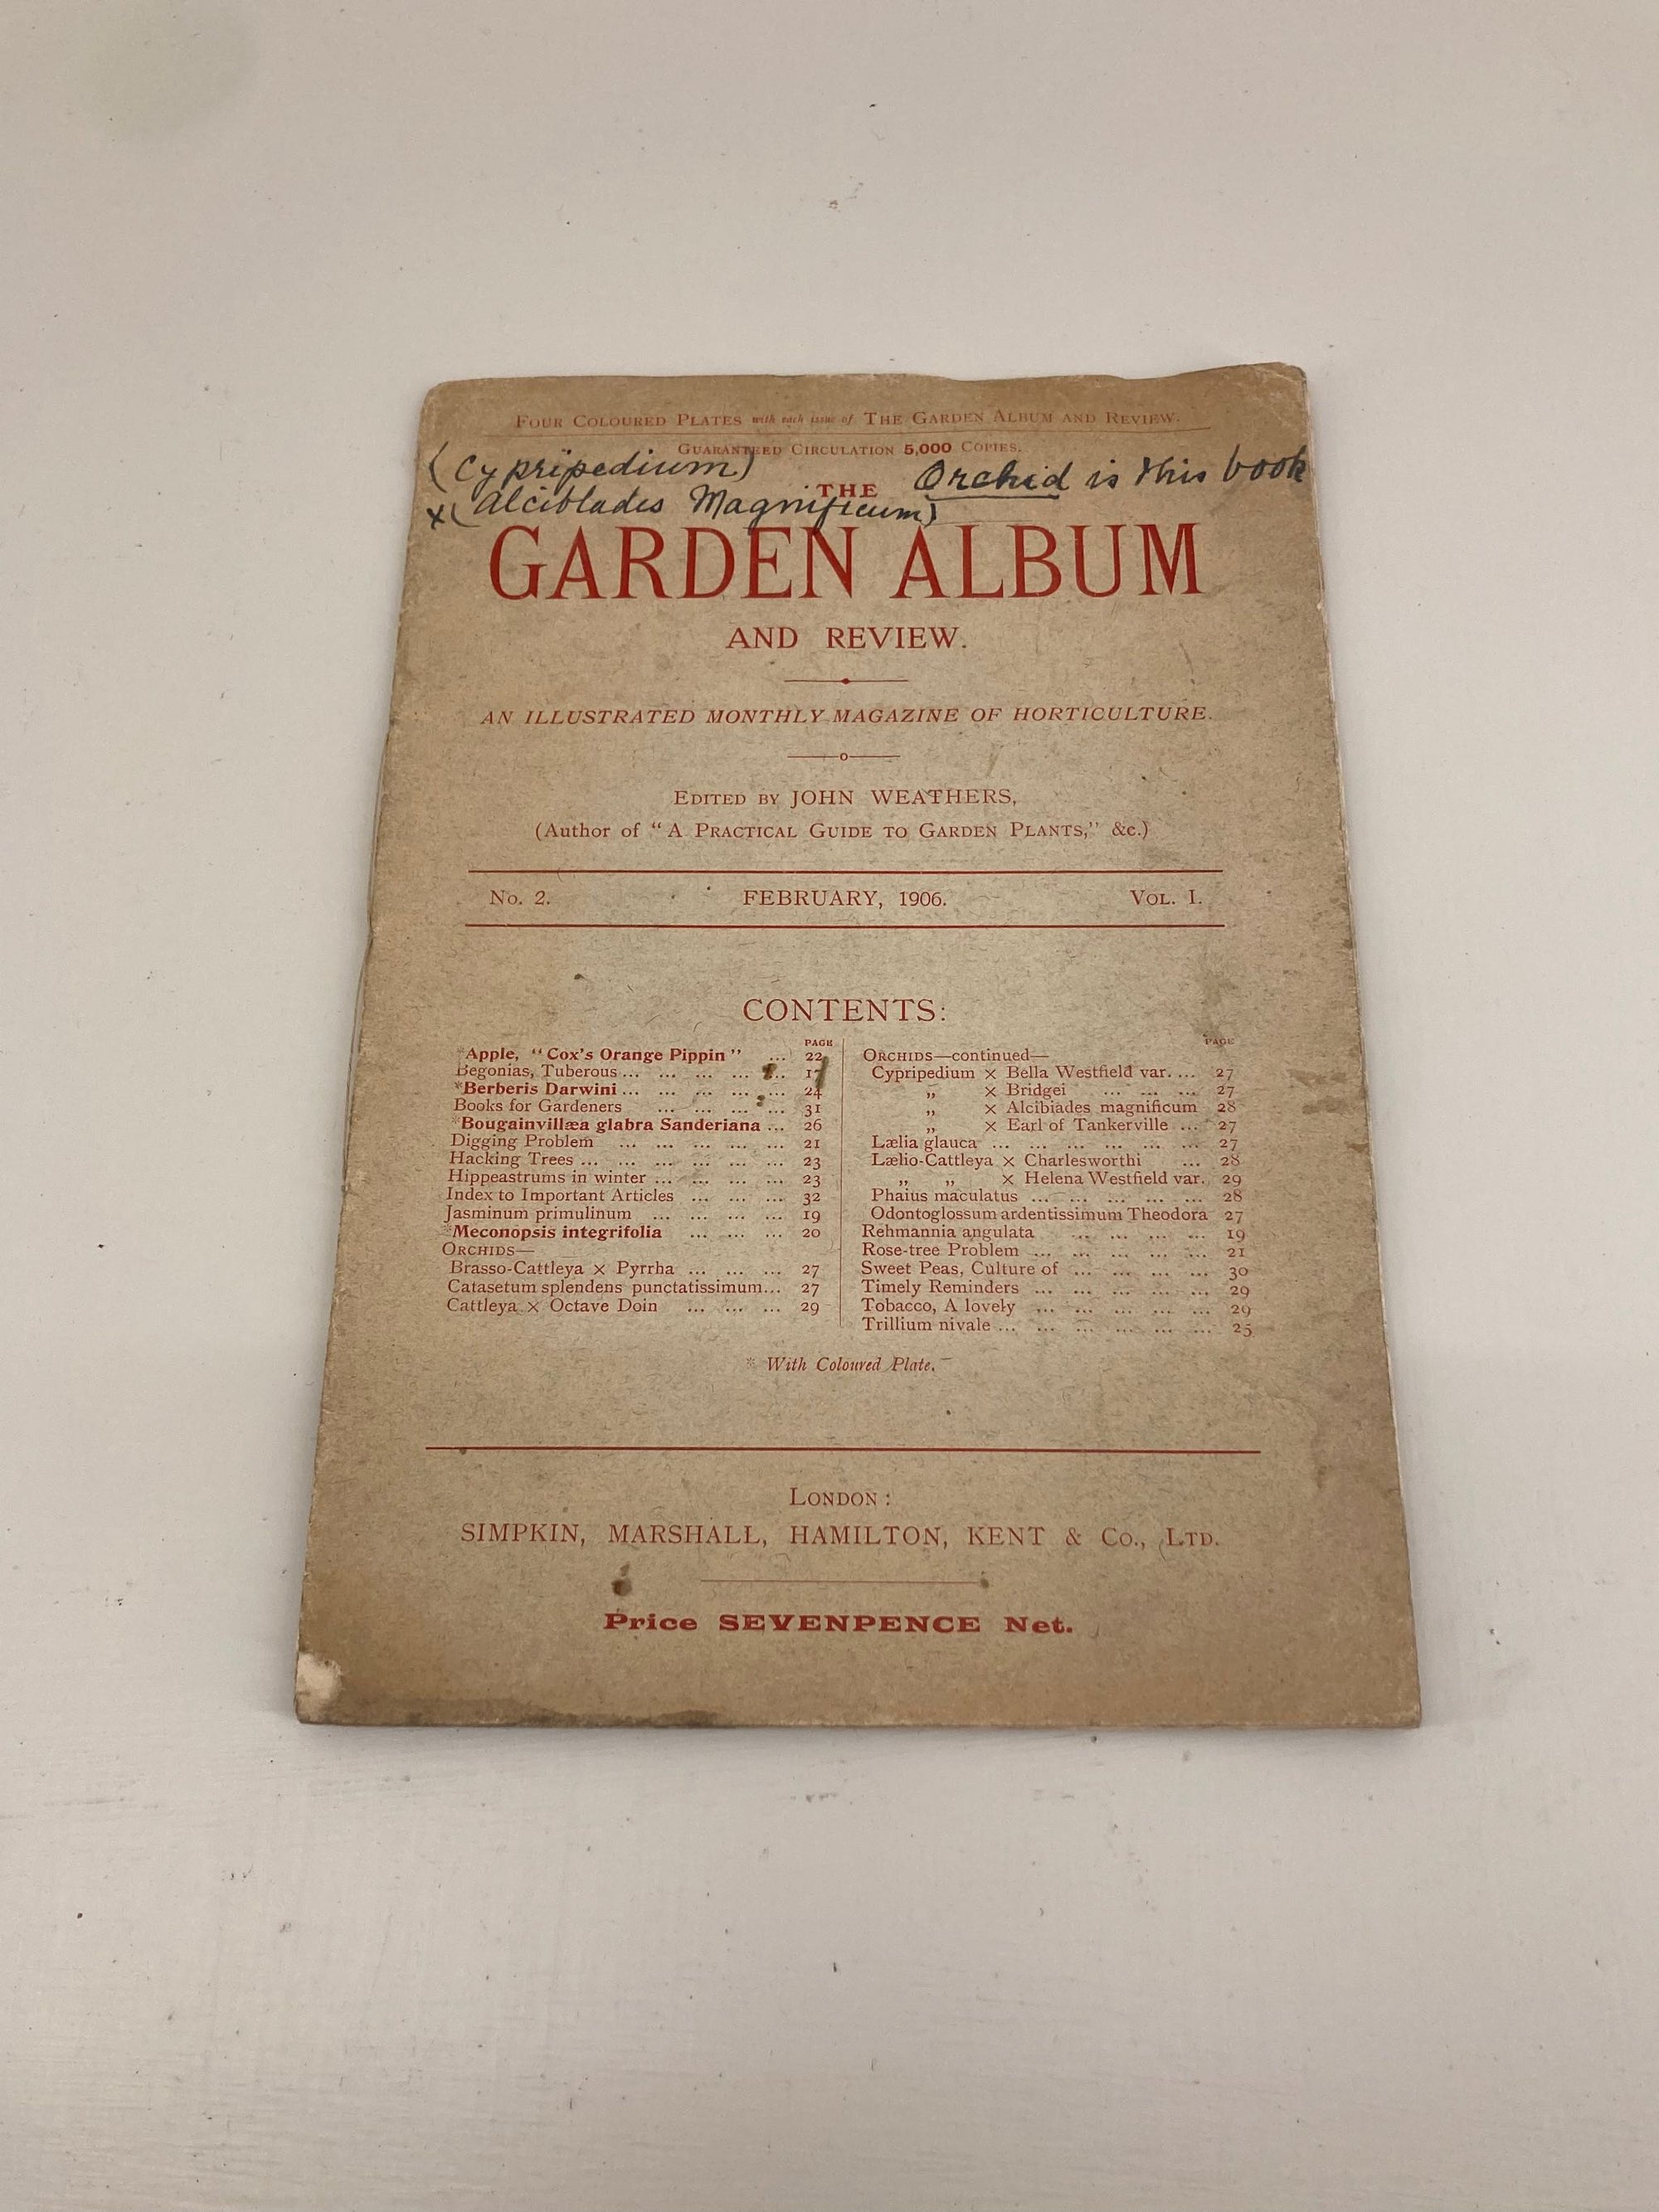 The Garden Album, February 1906